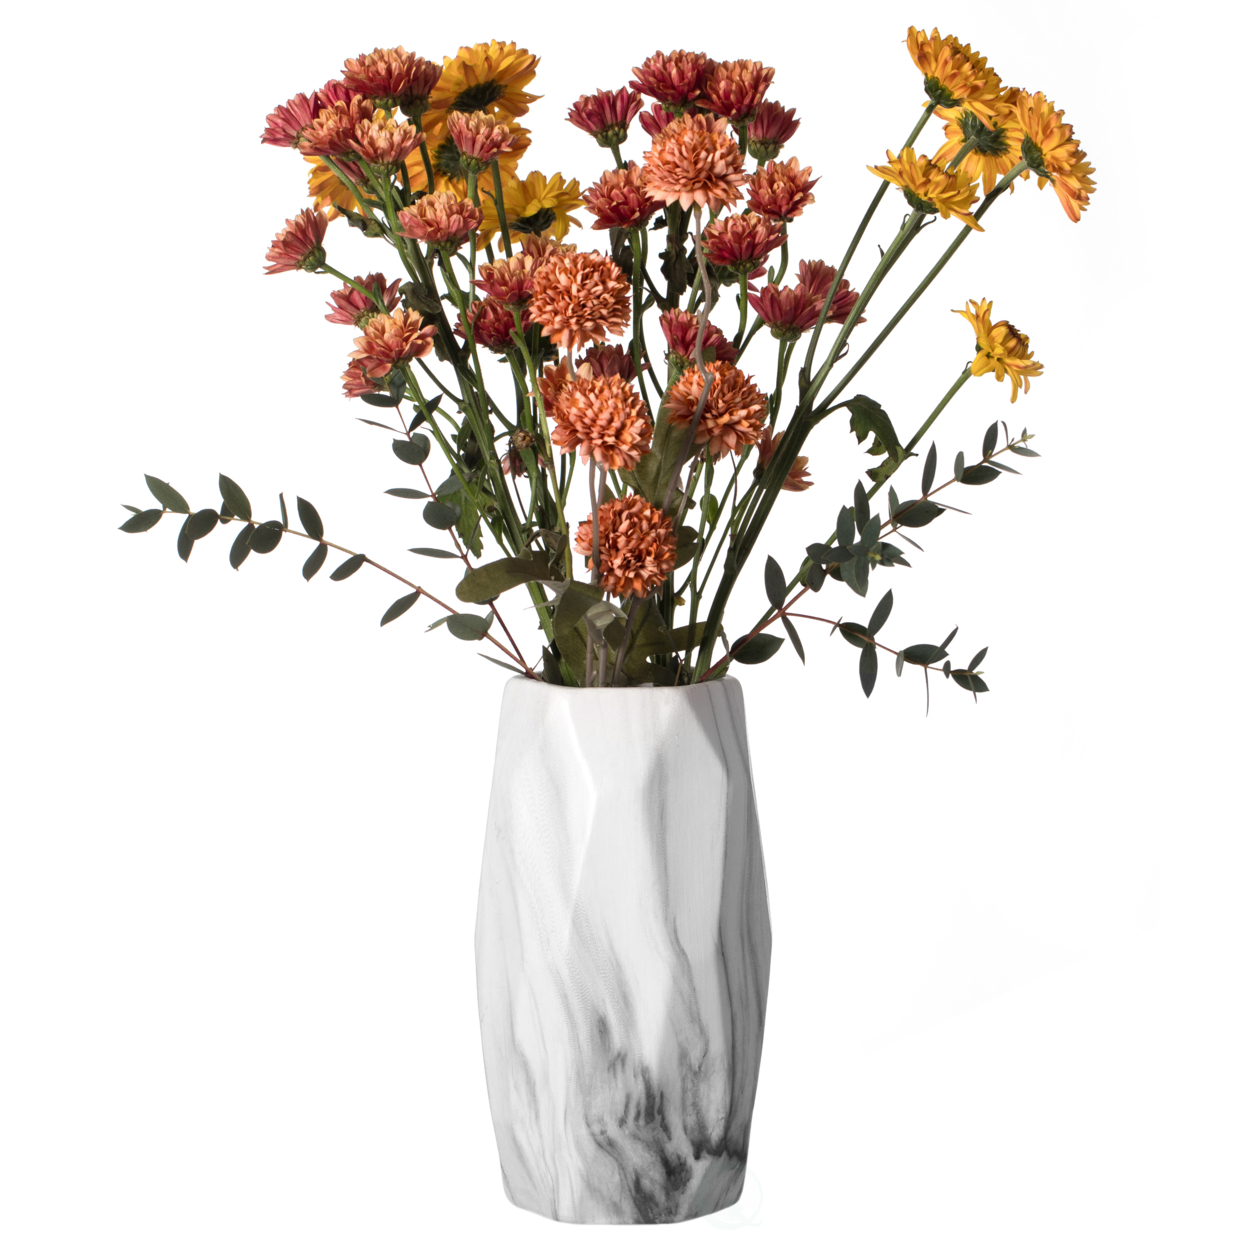 Contemporary Ceramic Marble Look Design Table Vase Geometric Flower Holder Decor - Small